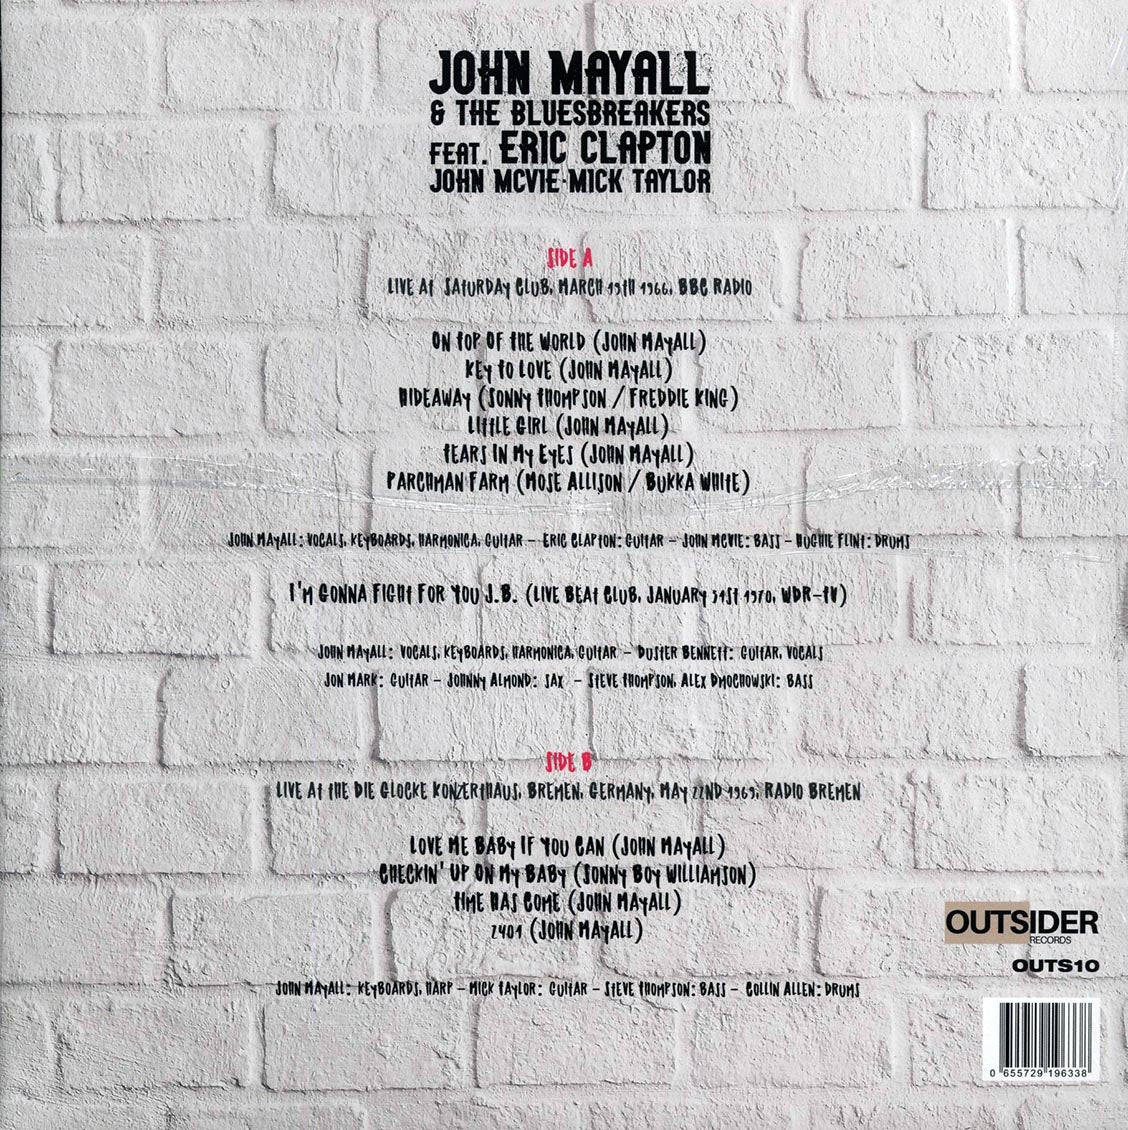 John Mayall & The Bluesbreakers, Eric Clapton, John Mcvie, Mick Taylor - Live At The BBC Radio Bremen 1966 & 1969 (clear vinyl) - Vinyl LP, LP